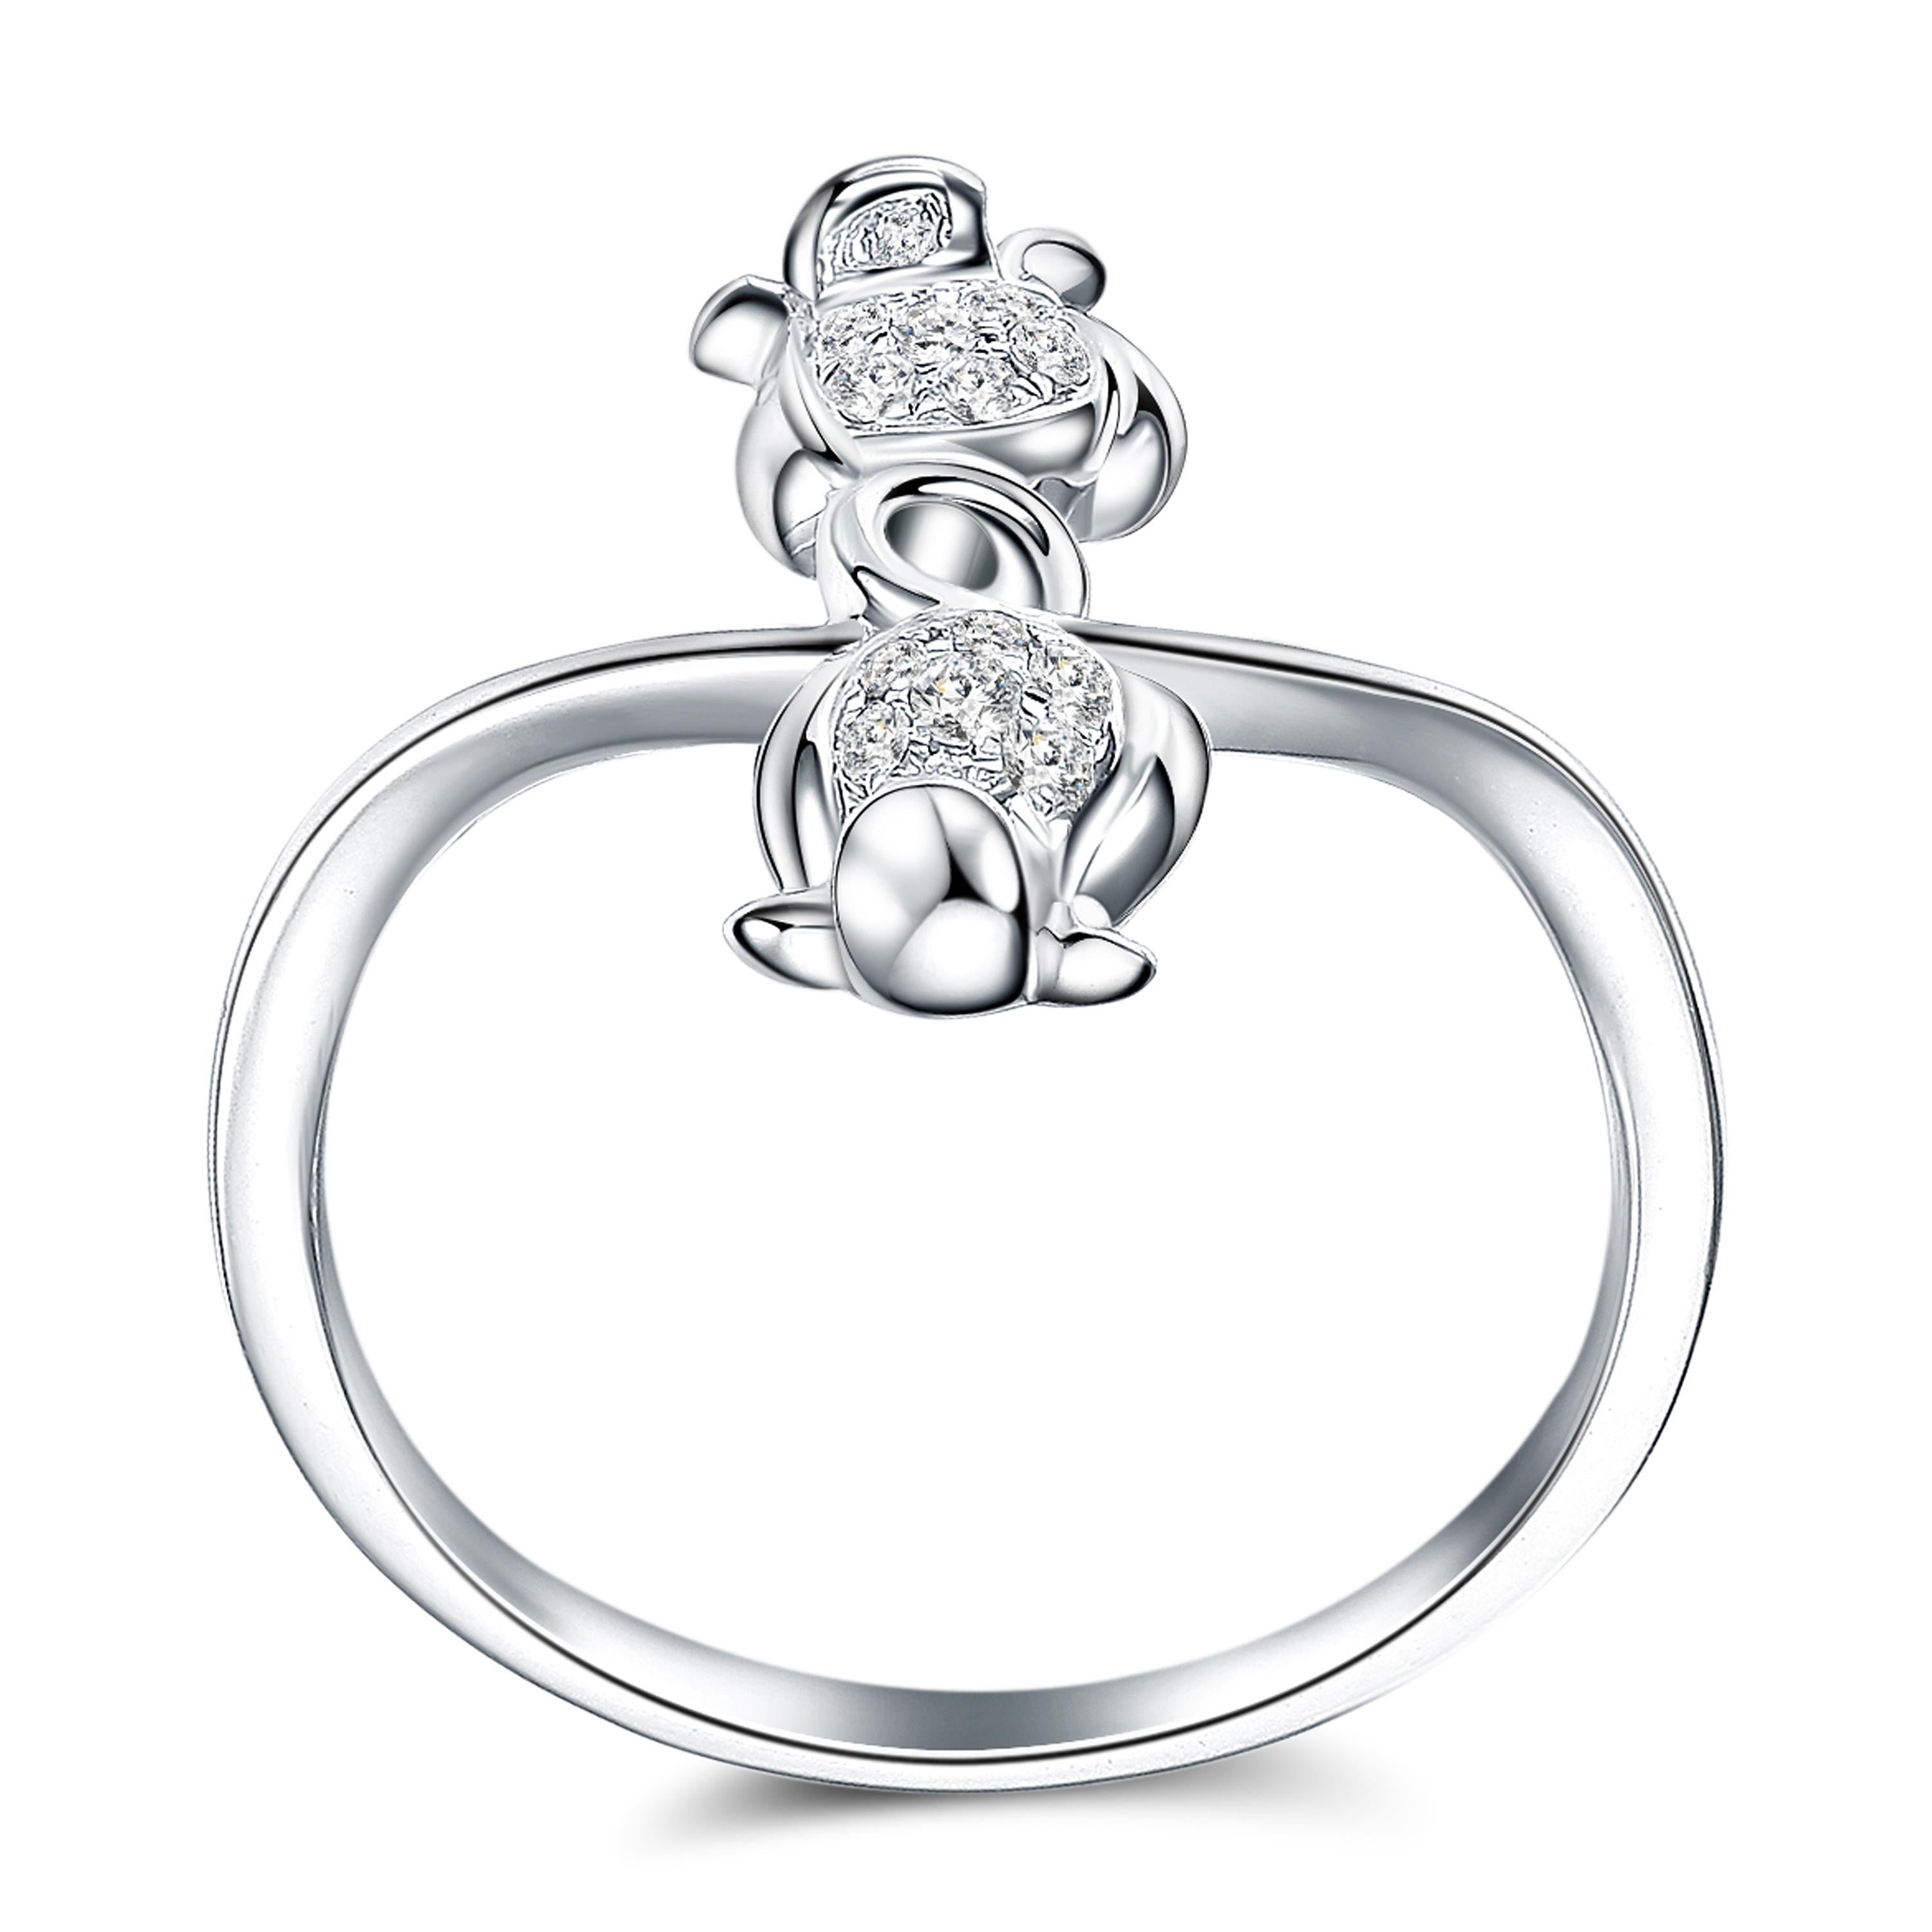 Brilliant Cut Fei Liu Diamond 9 Karat White Gold Fashion Flower Ring - Size 7.25 (~O) For Sale